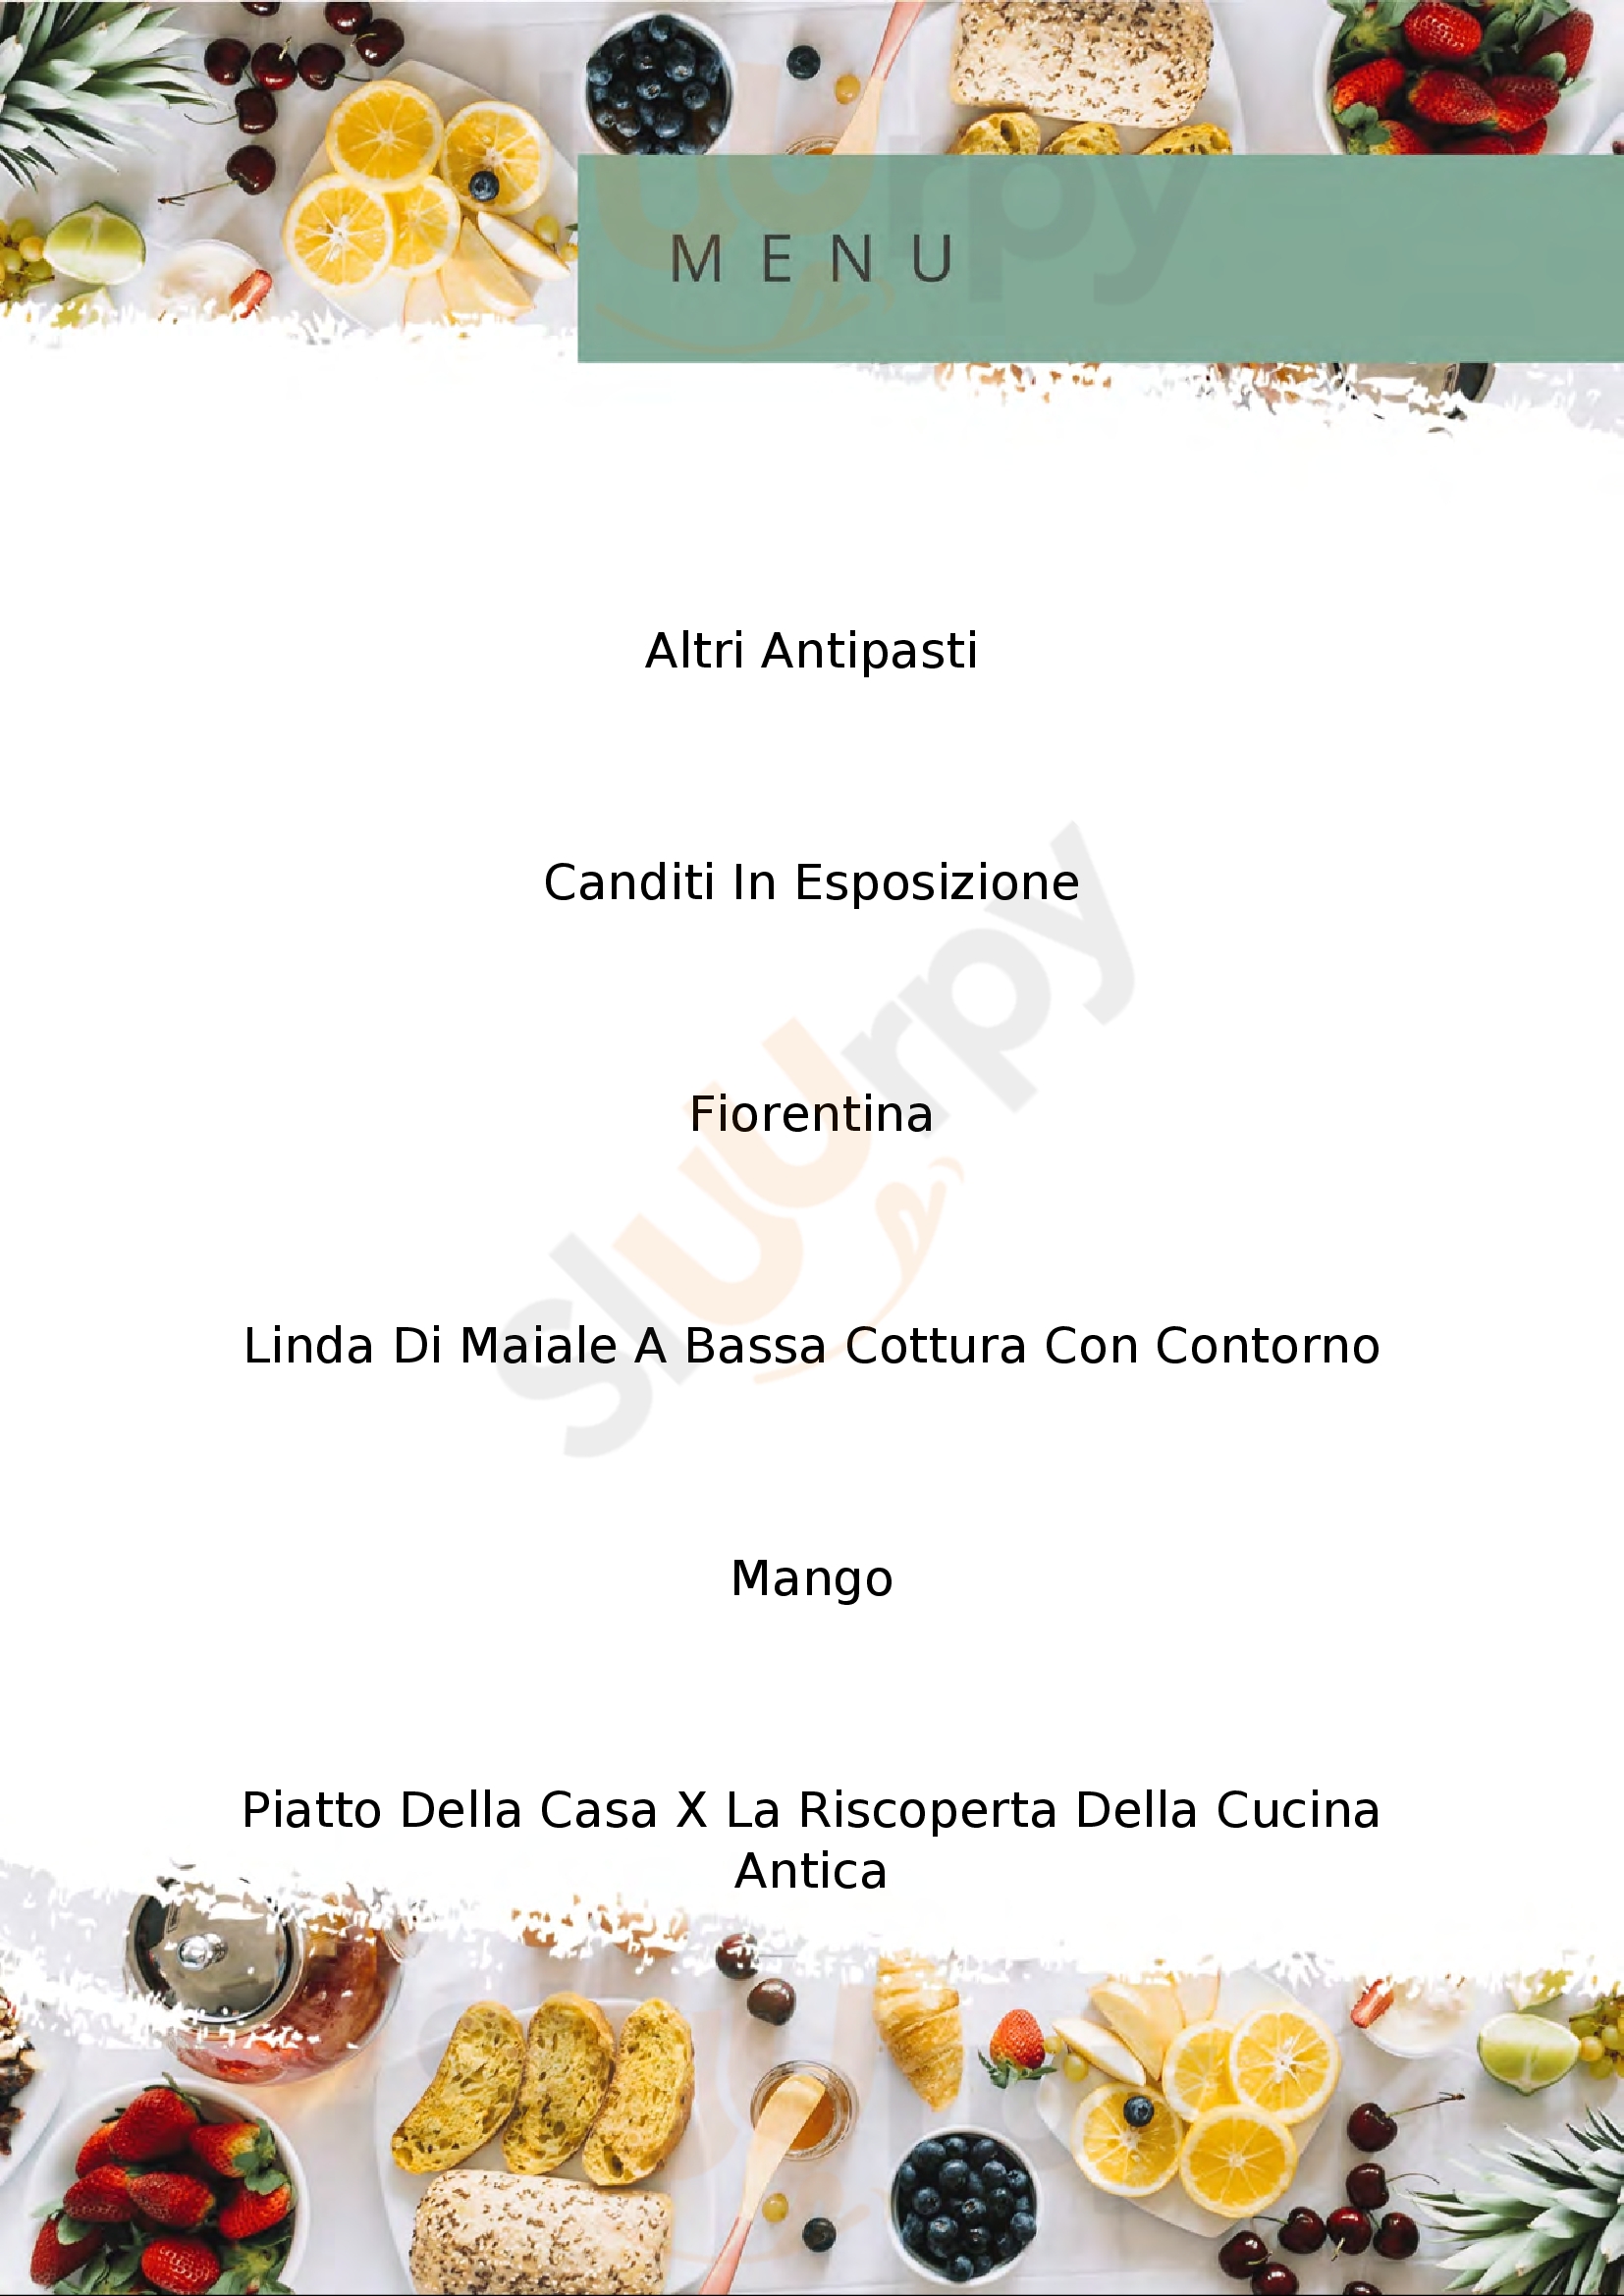 Pintadera Cagliari menù 1 pagina